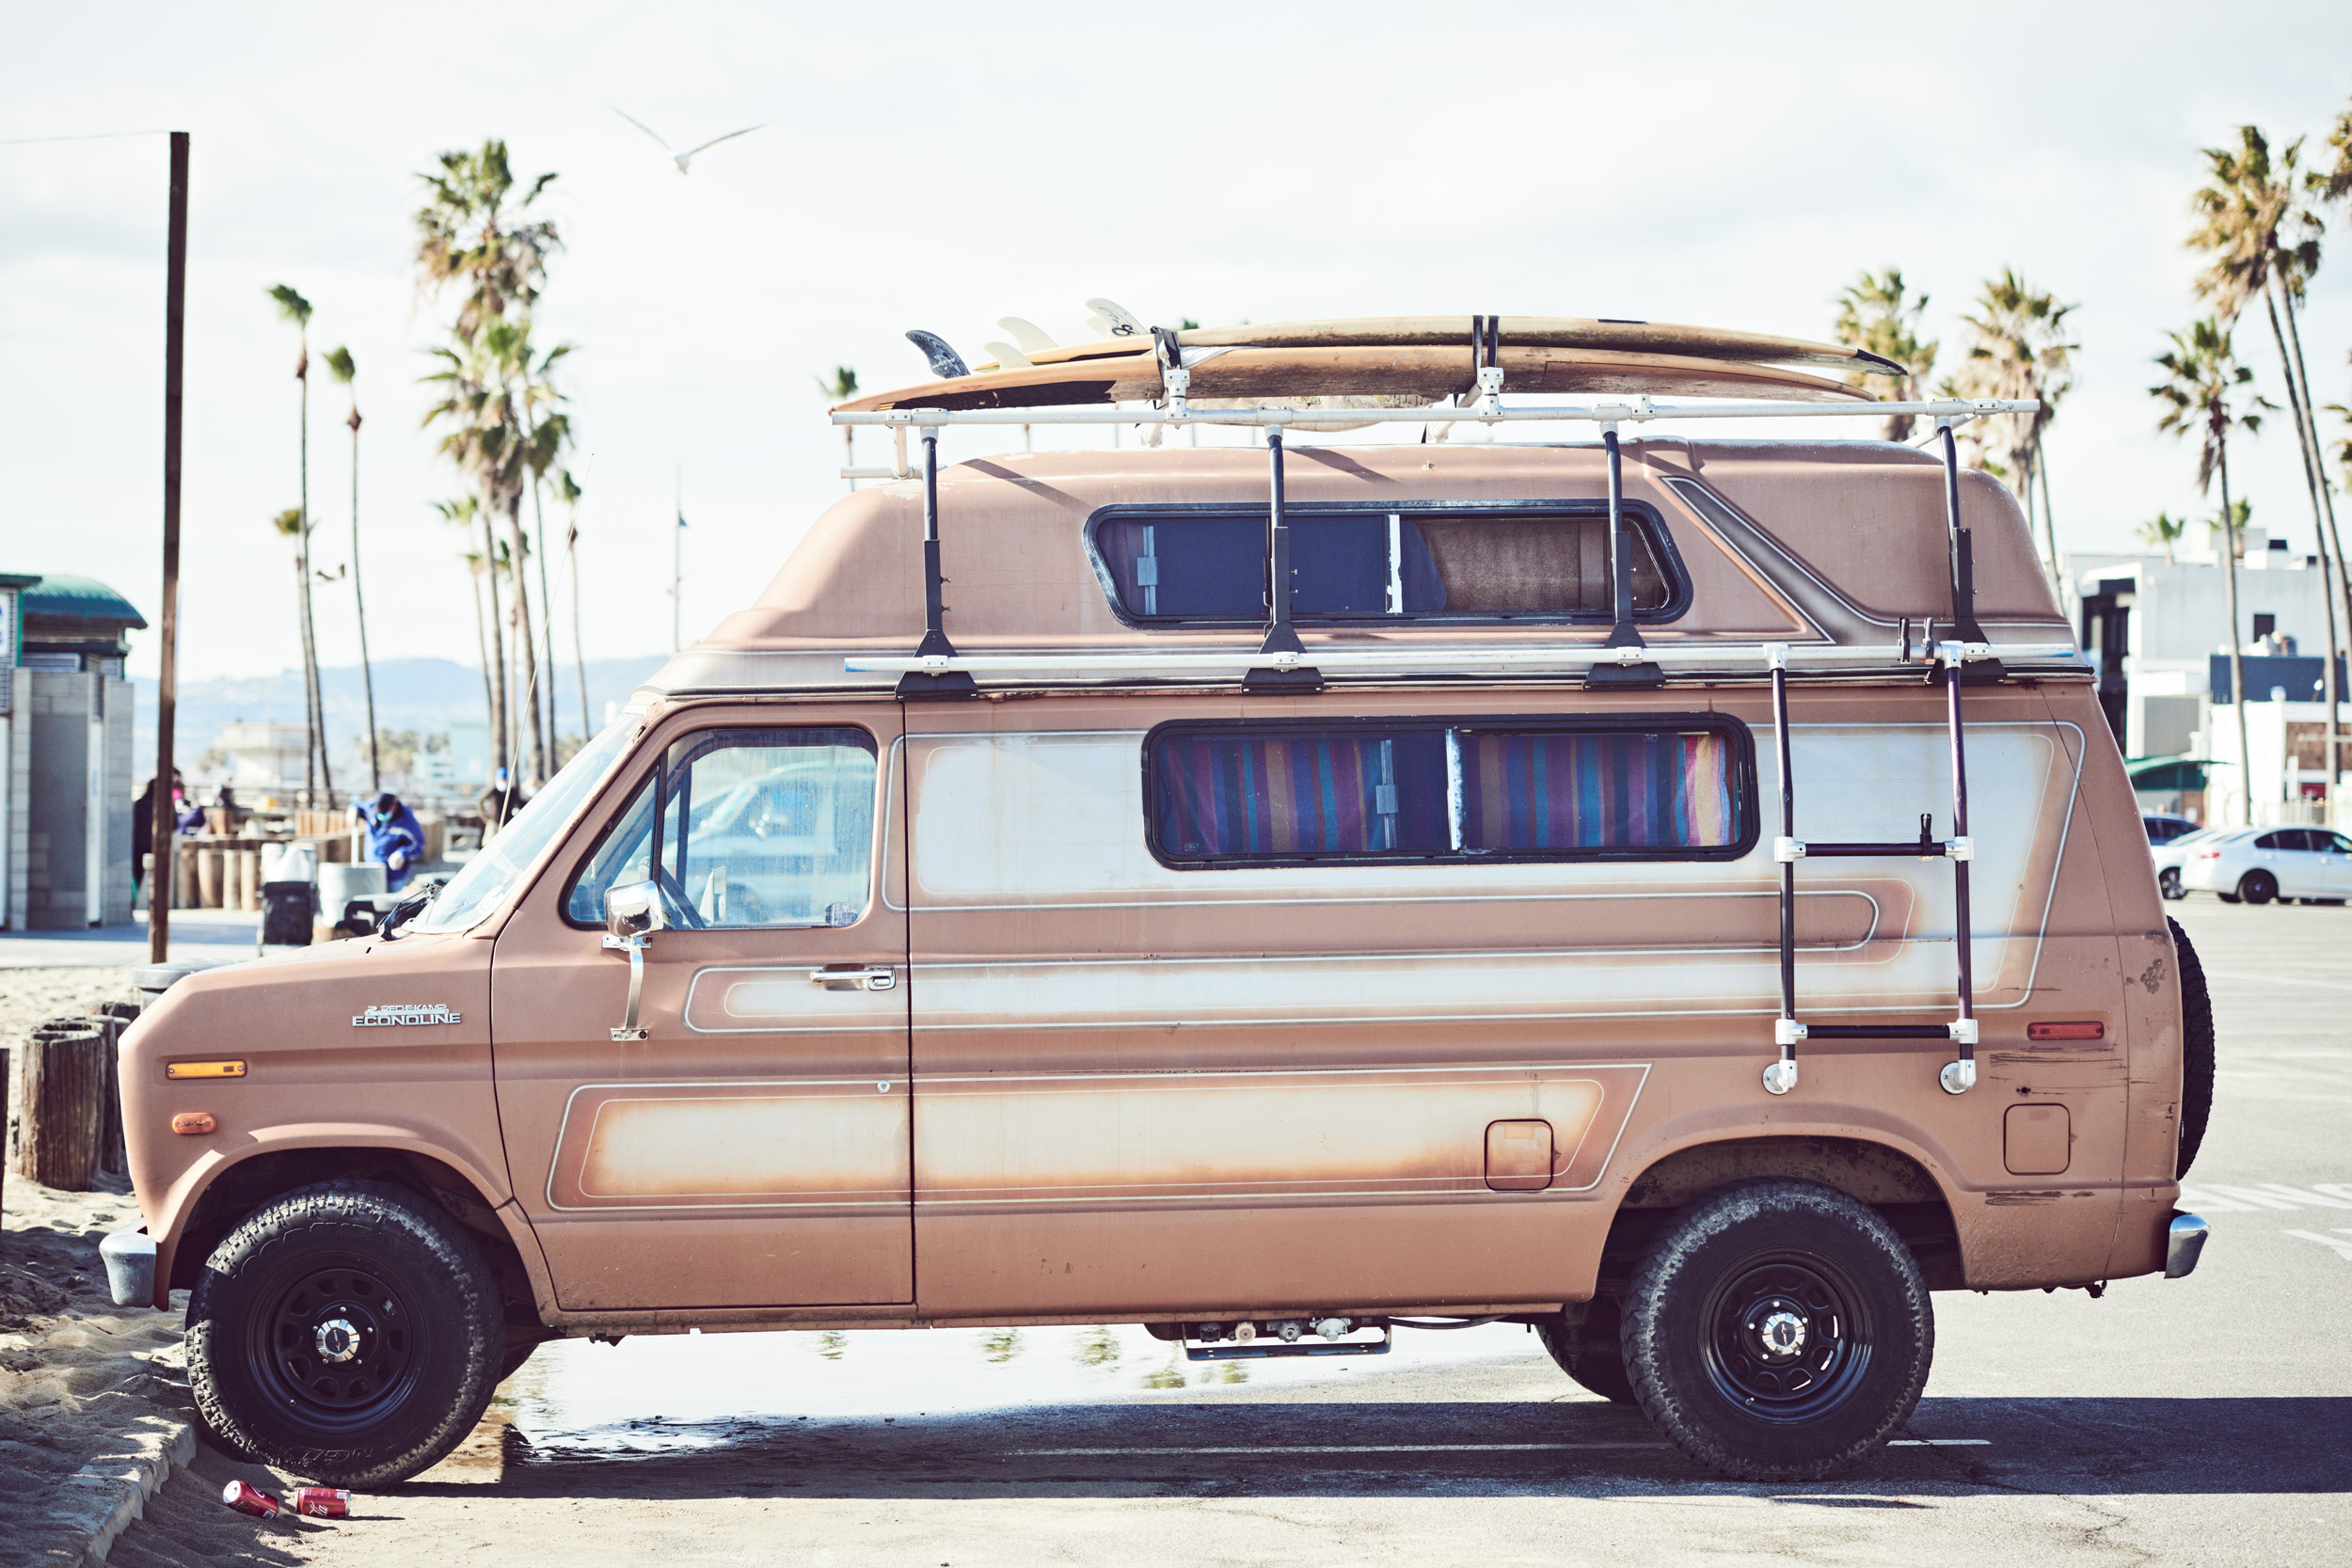 A surf van parked in a Venice Beach parking lot.